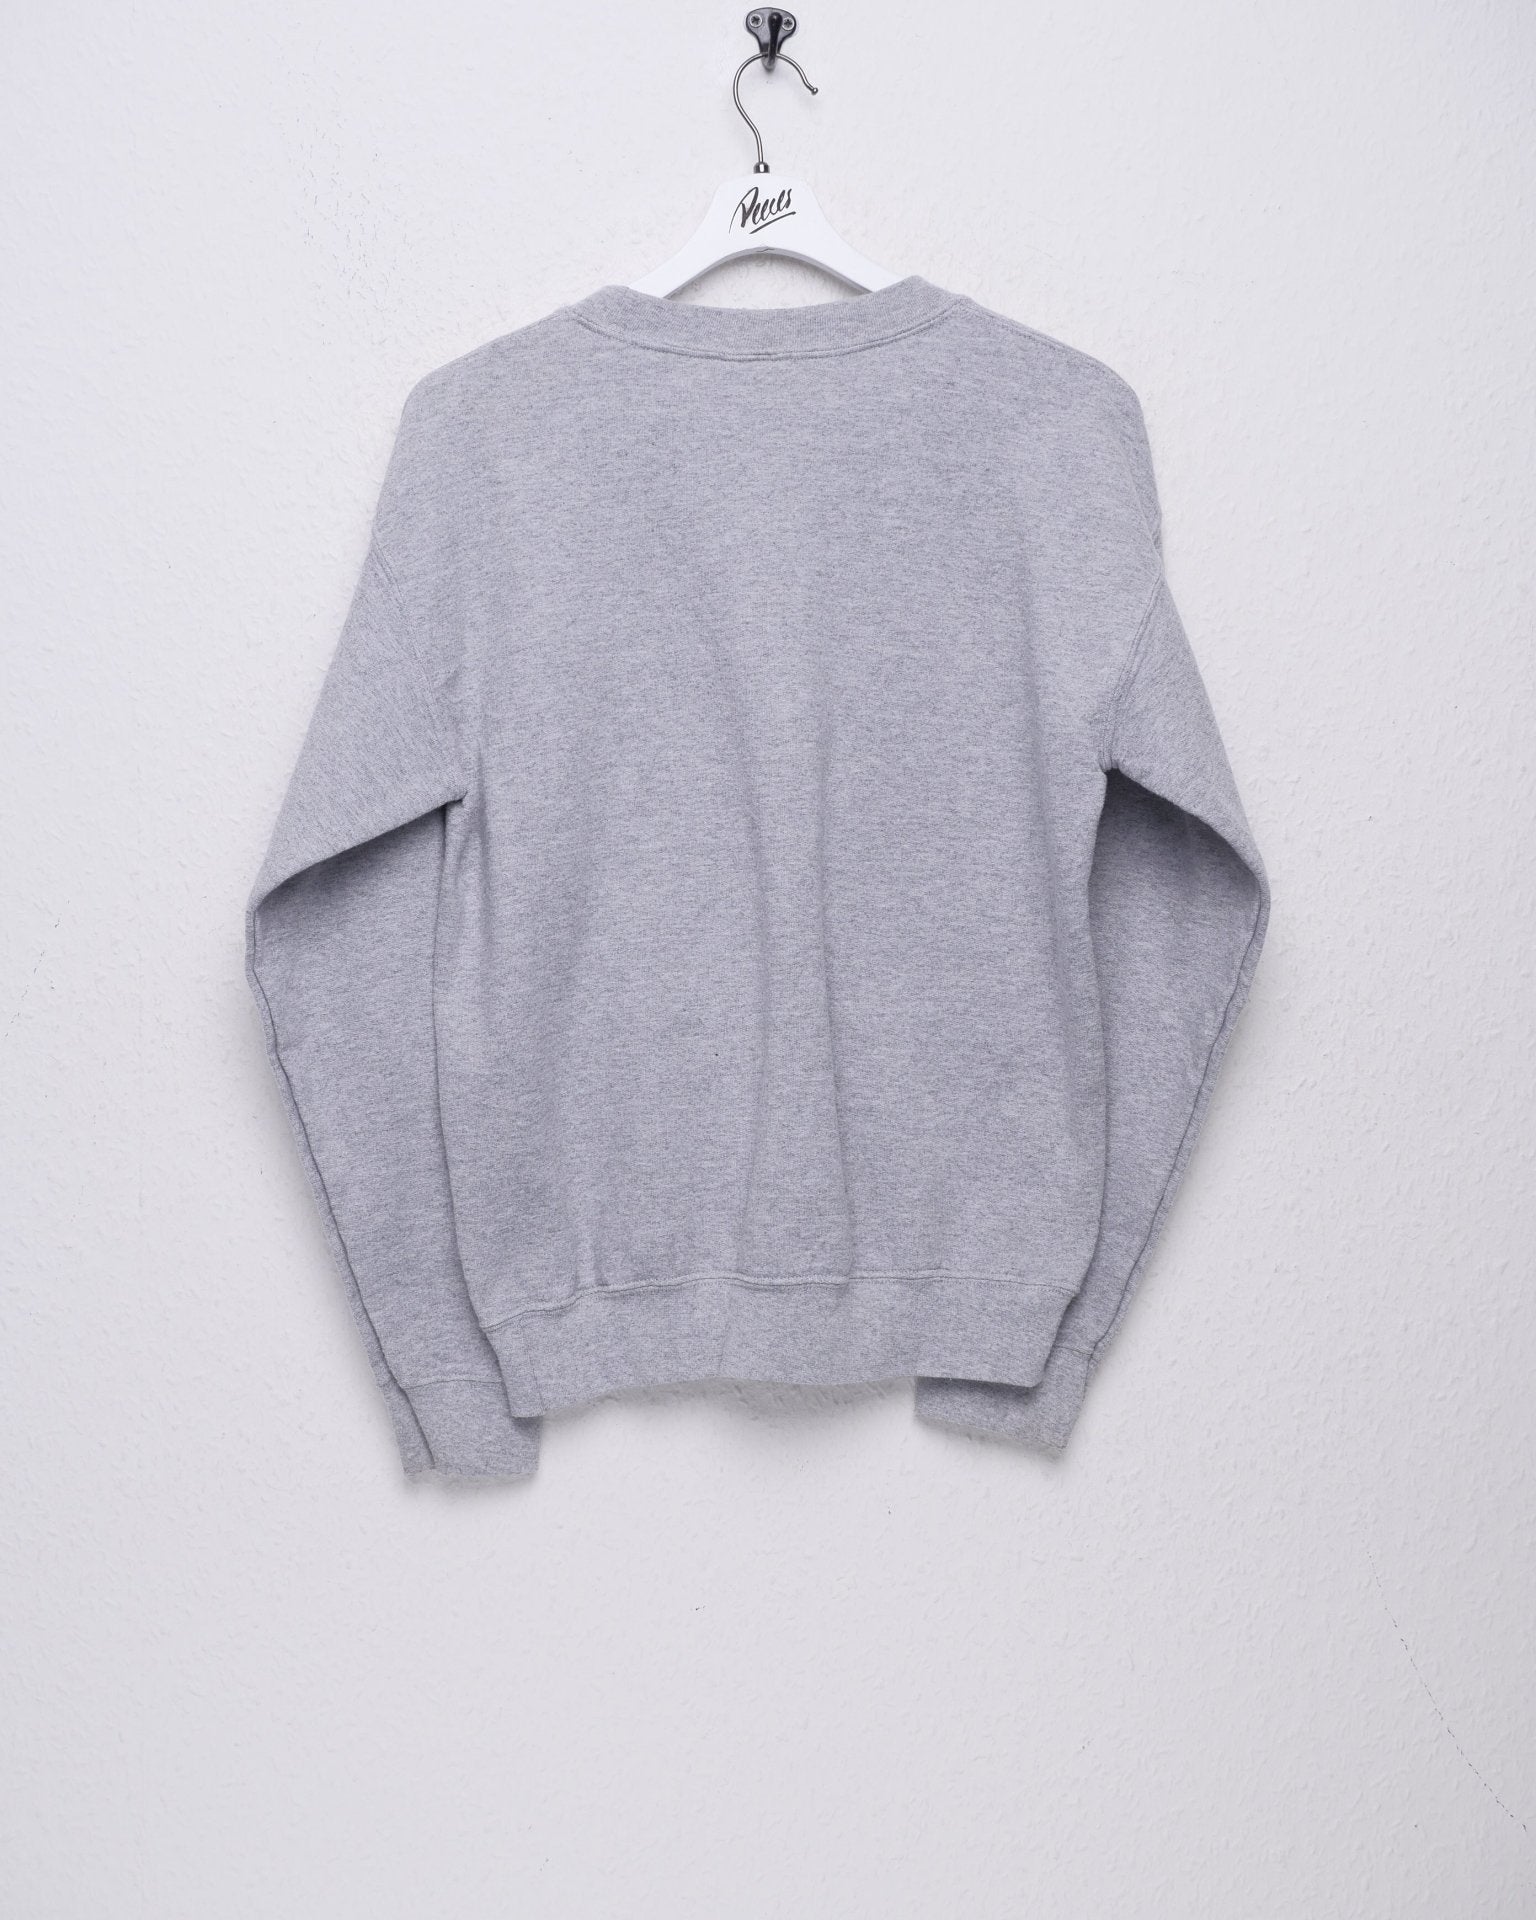 printed 'Lancaster Barnstormers' Grey Sweater - Peeces